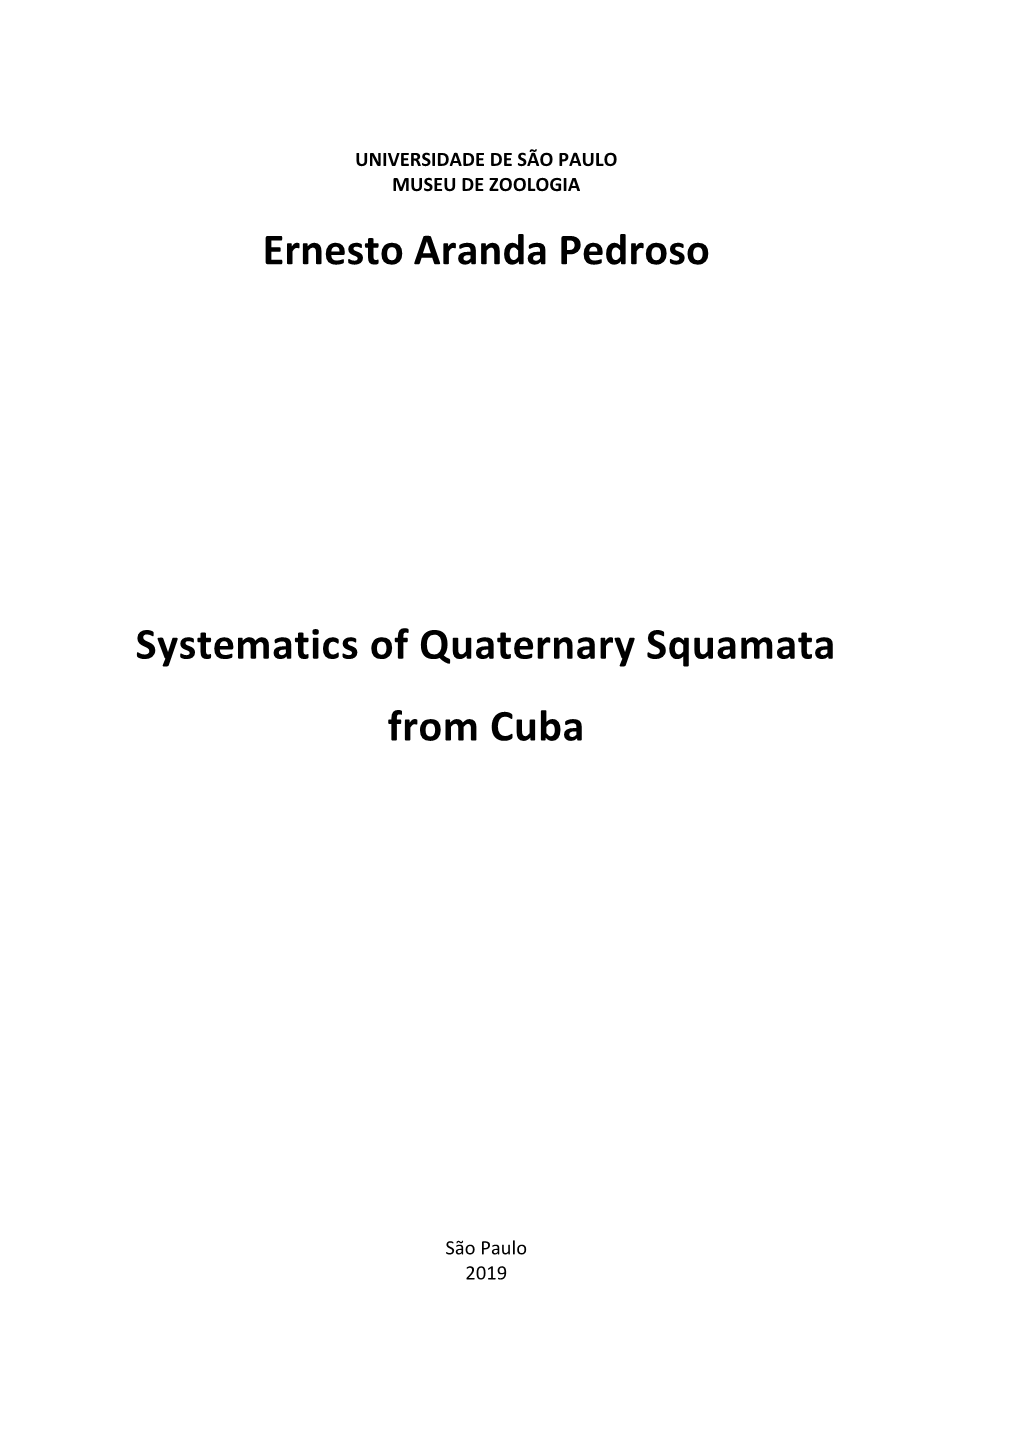 Systematics of Quaternary Squamata from Cuba